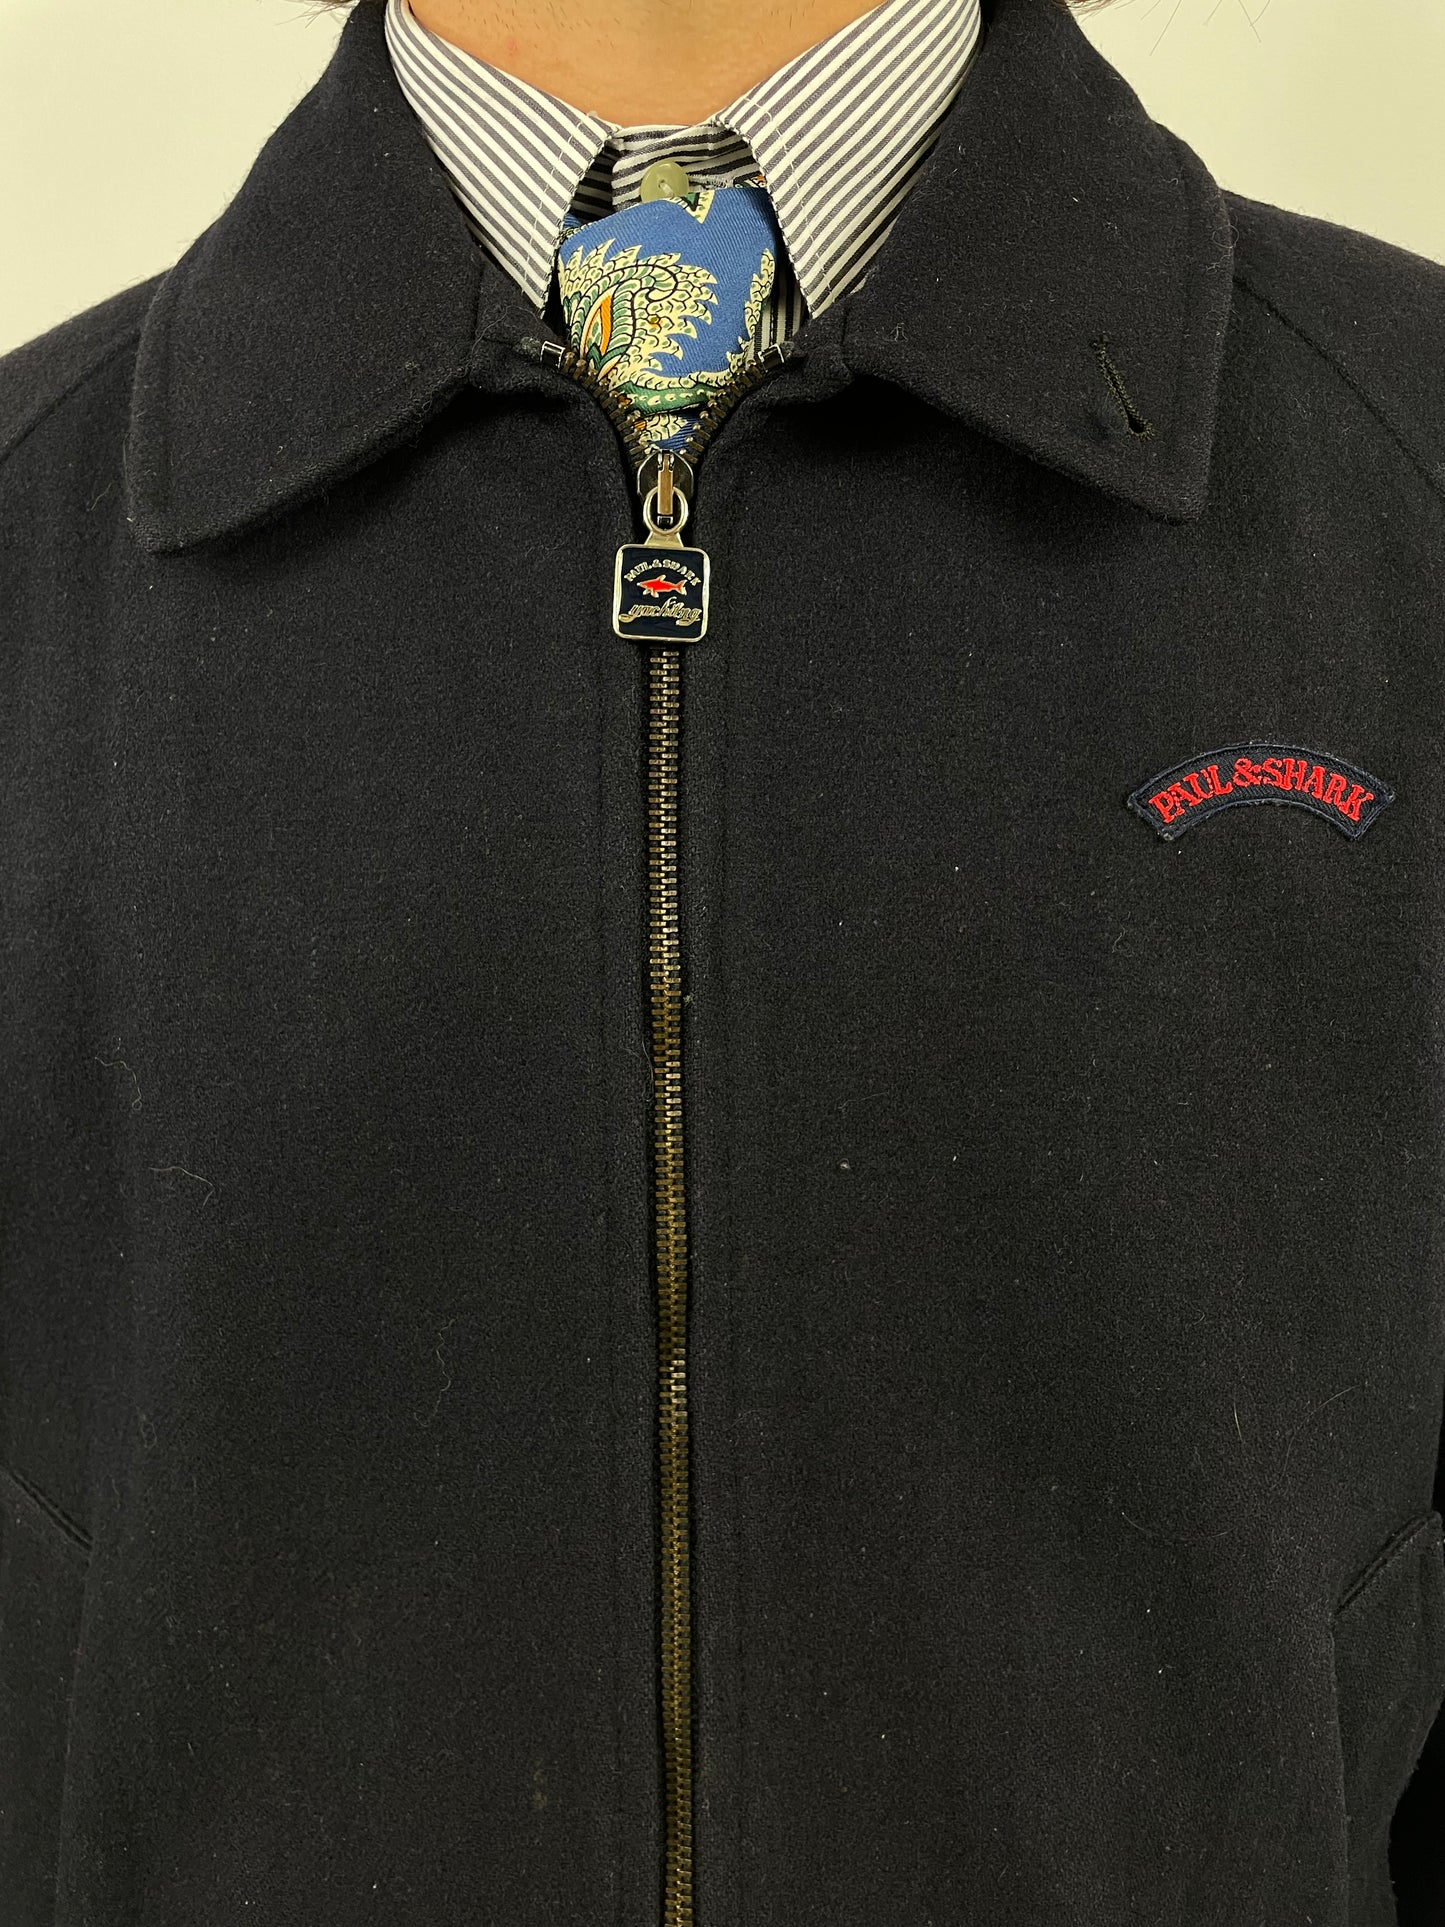 Paul &amp; Shark 1990s bomber jacket